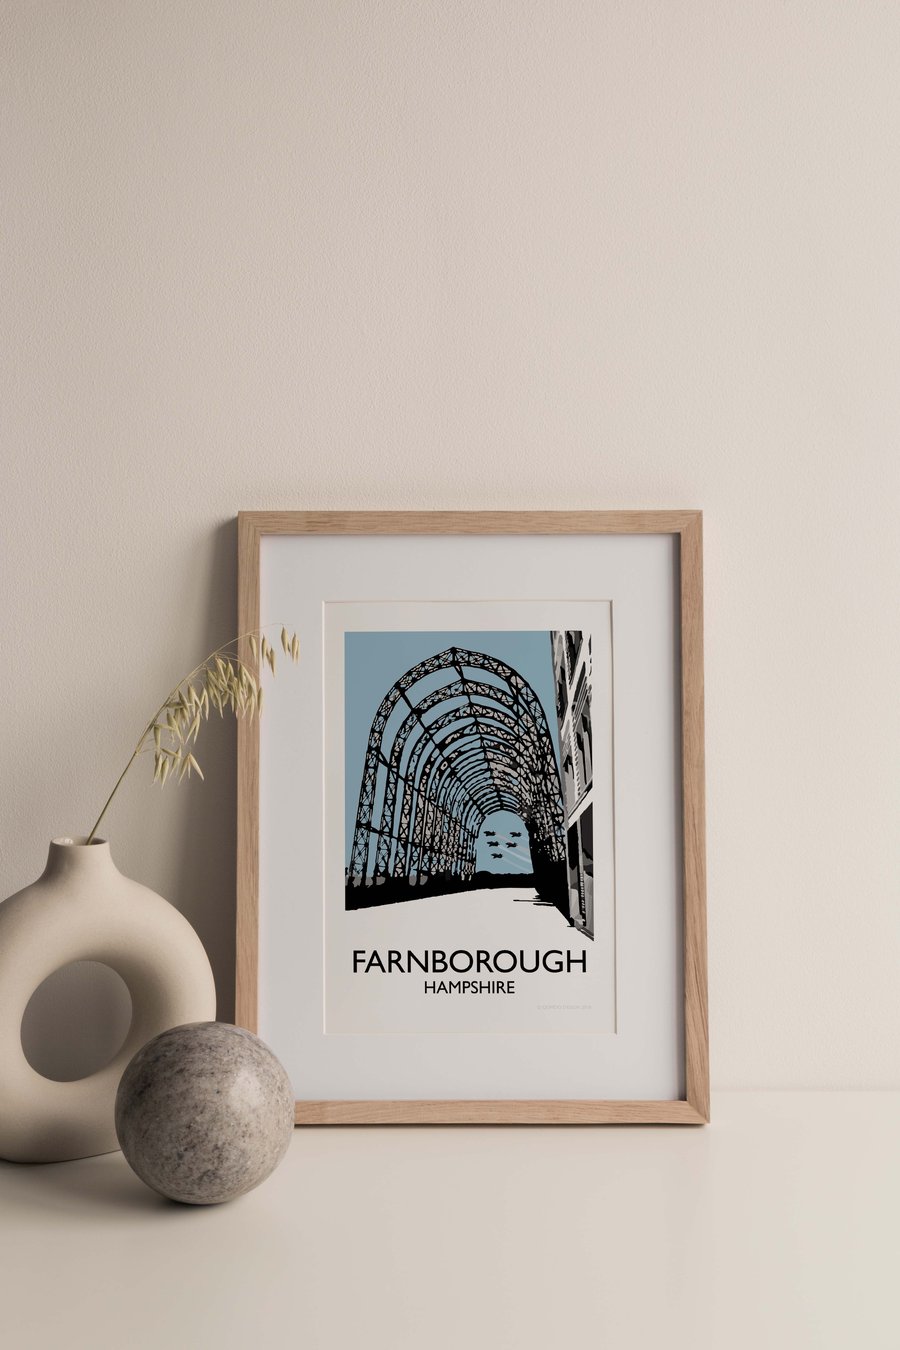 Farnborough, Hampshire, UK Giclee Travel Print A4 size (unframed)